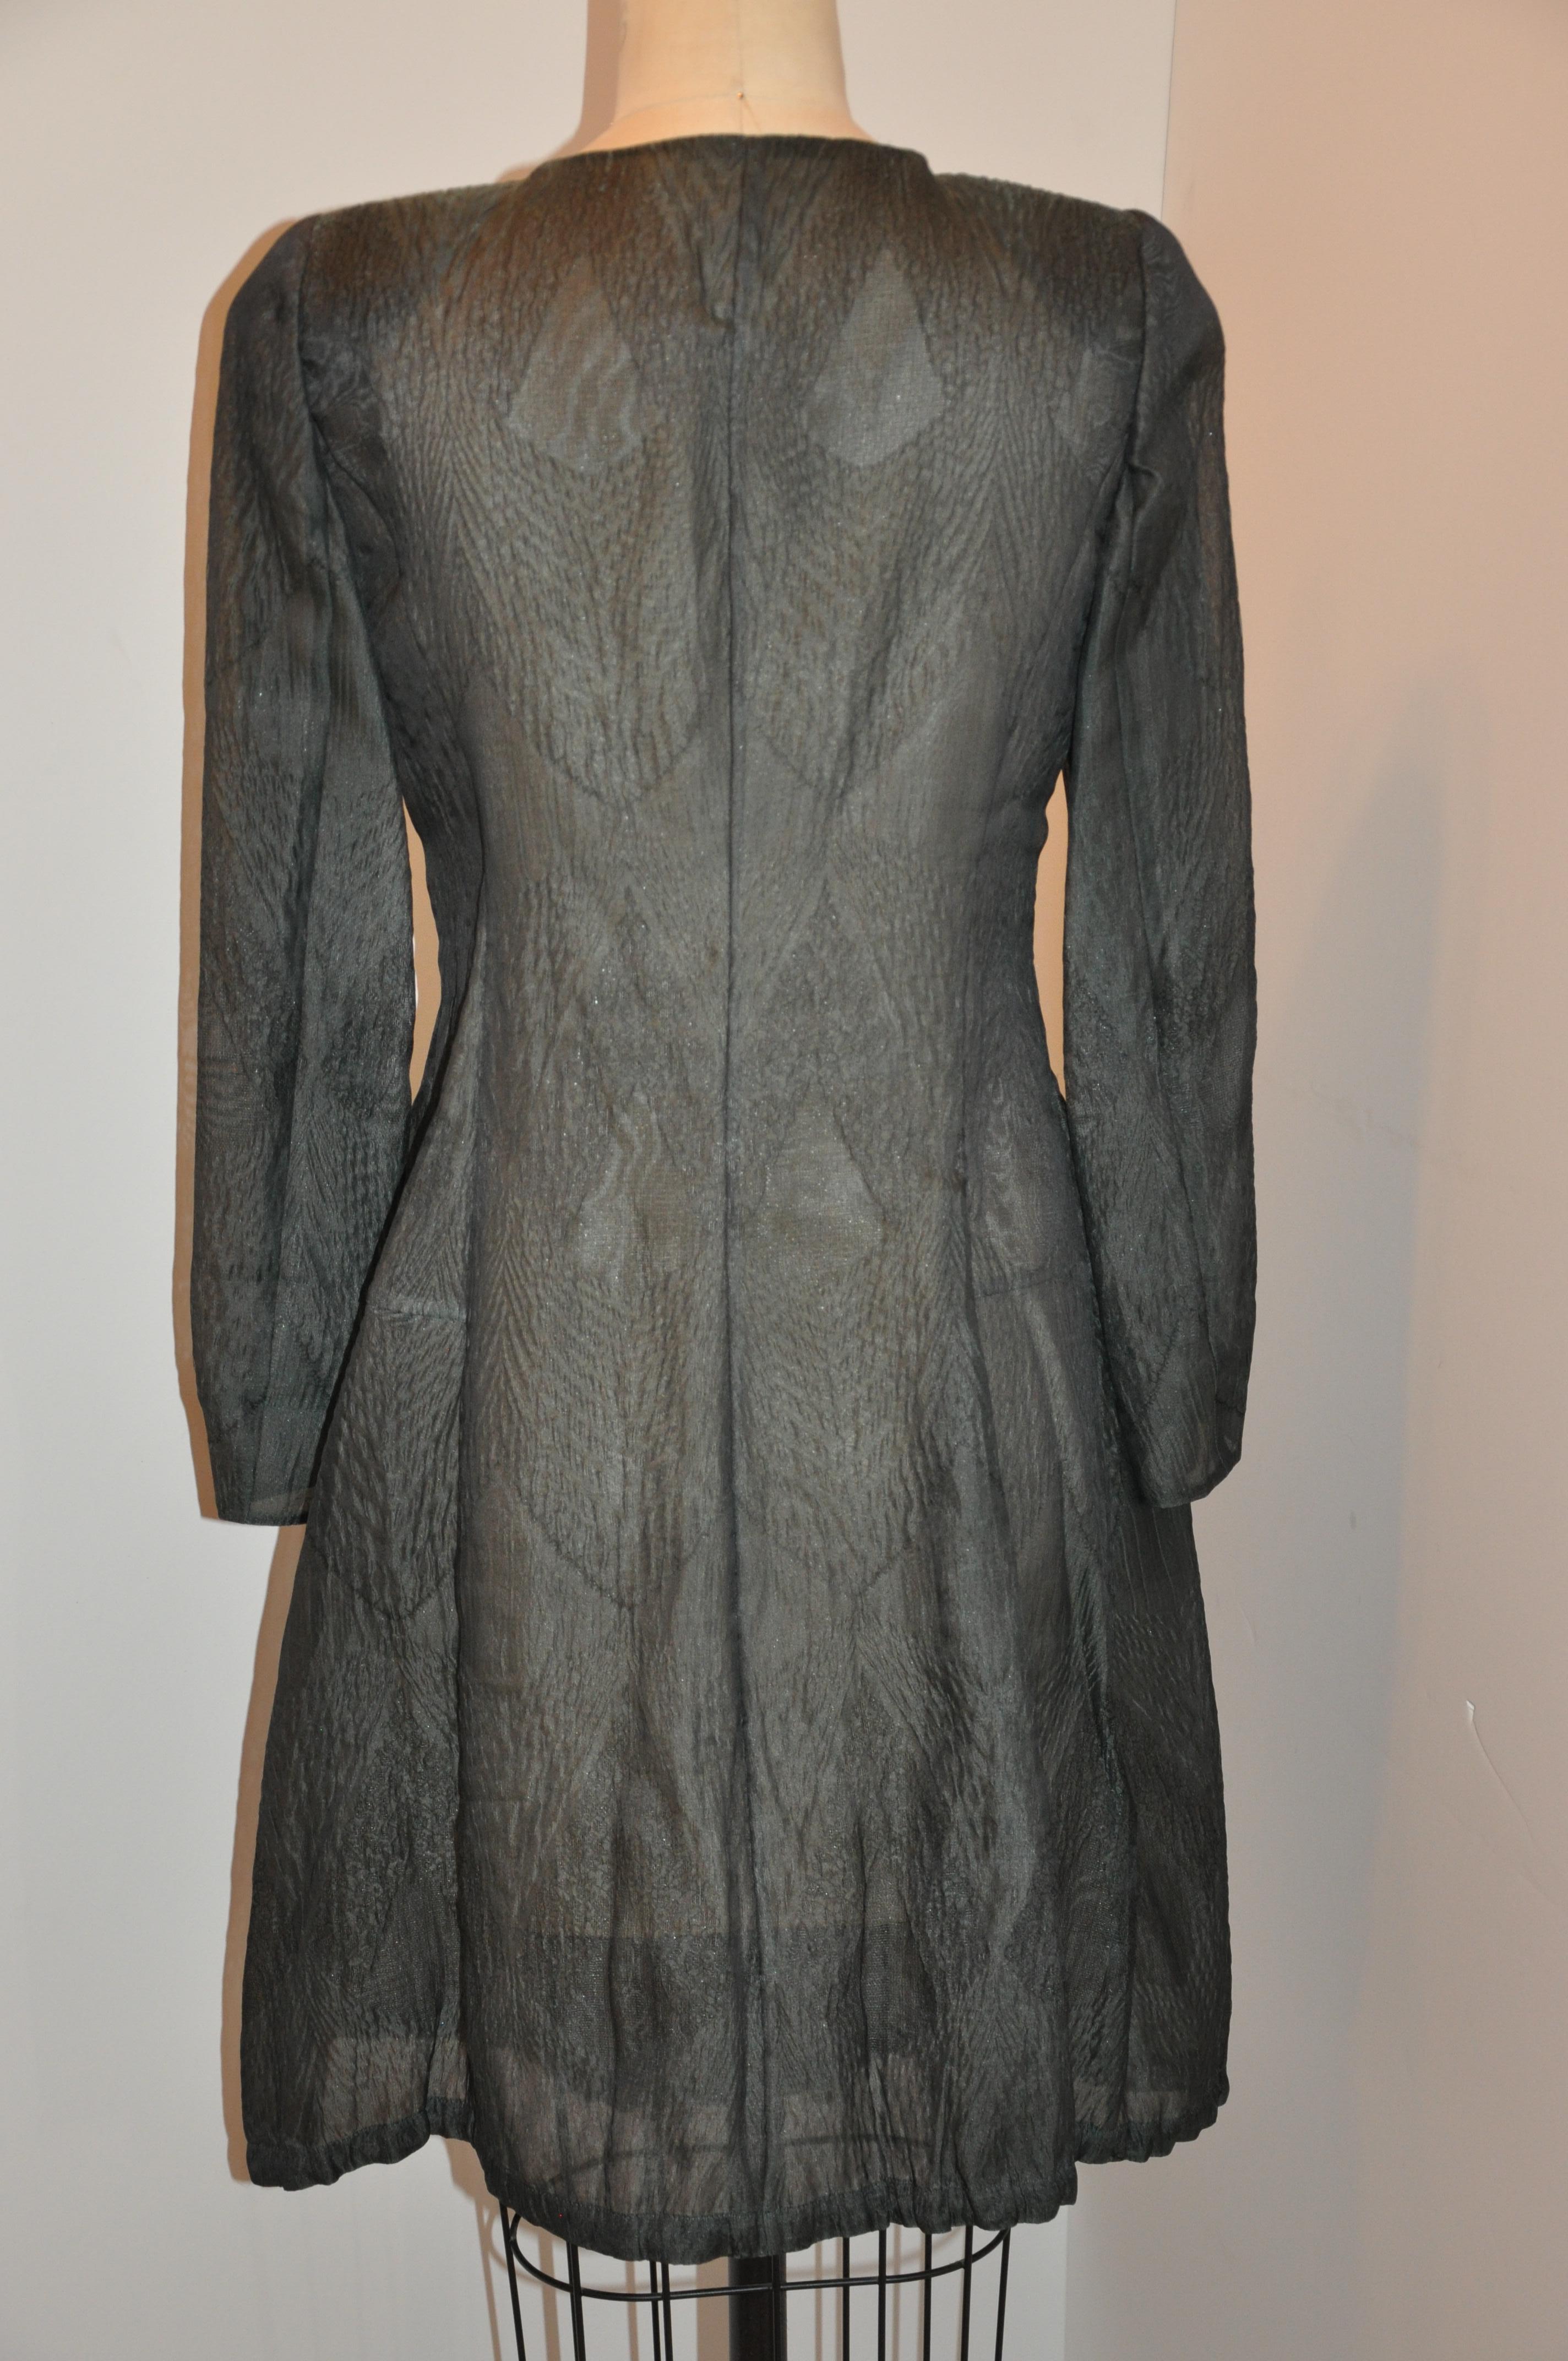 Georgio Armani 'Black Label' Forest-Green Silk Taffeta 2-Way Zippered Dress/Coat In Good Condition For Sale In New York, NY